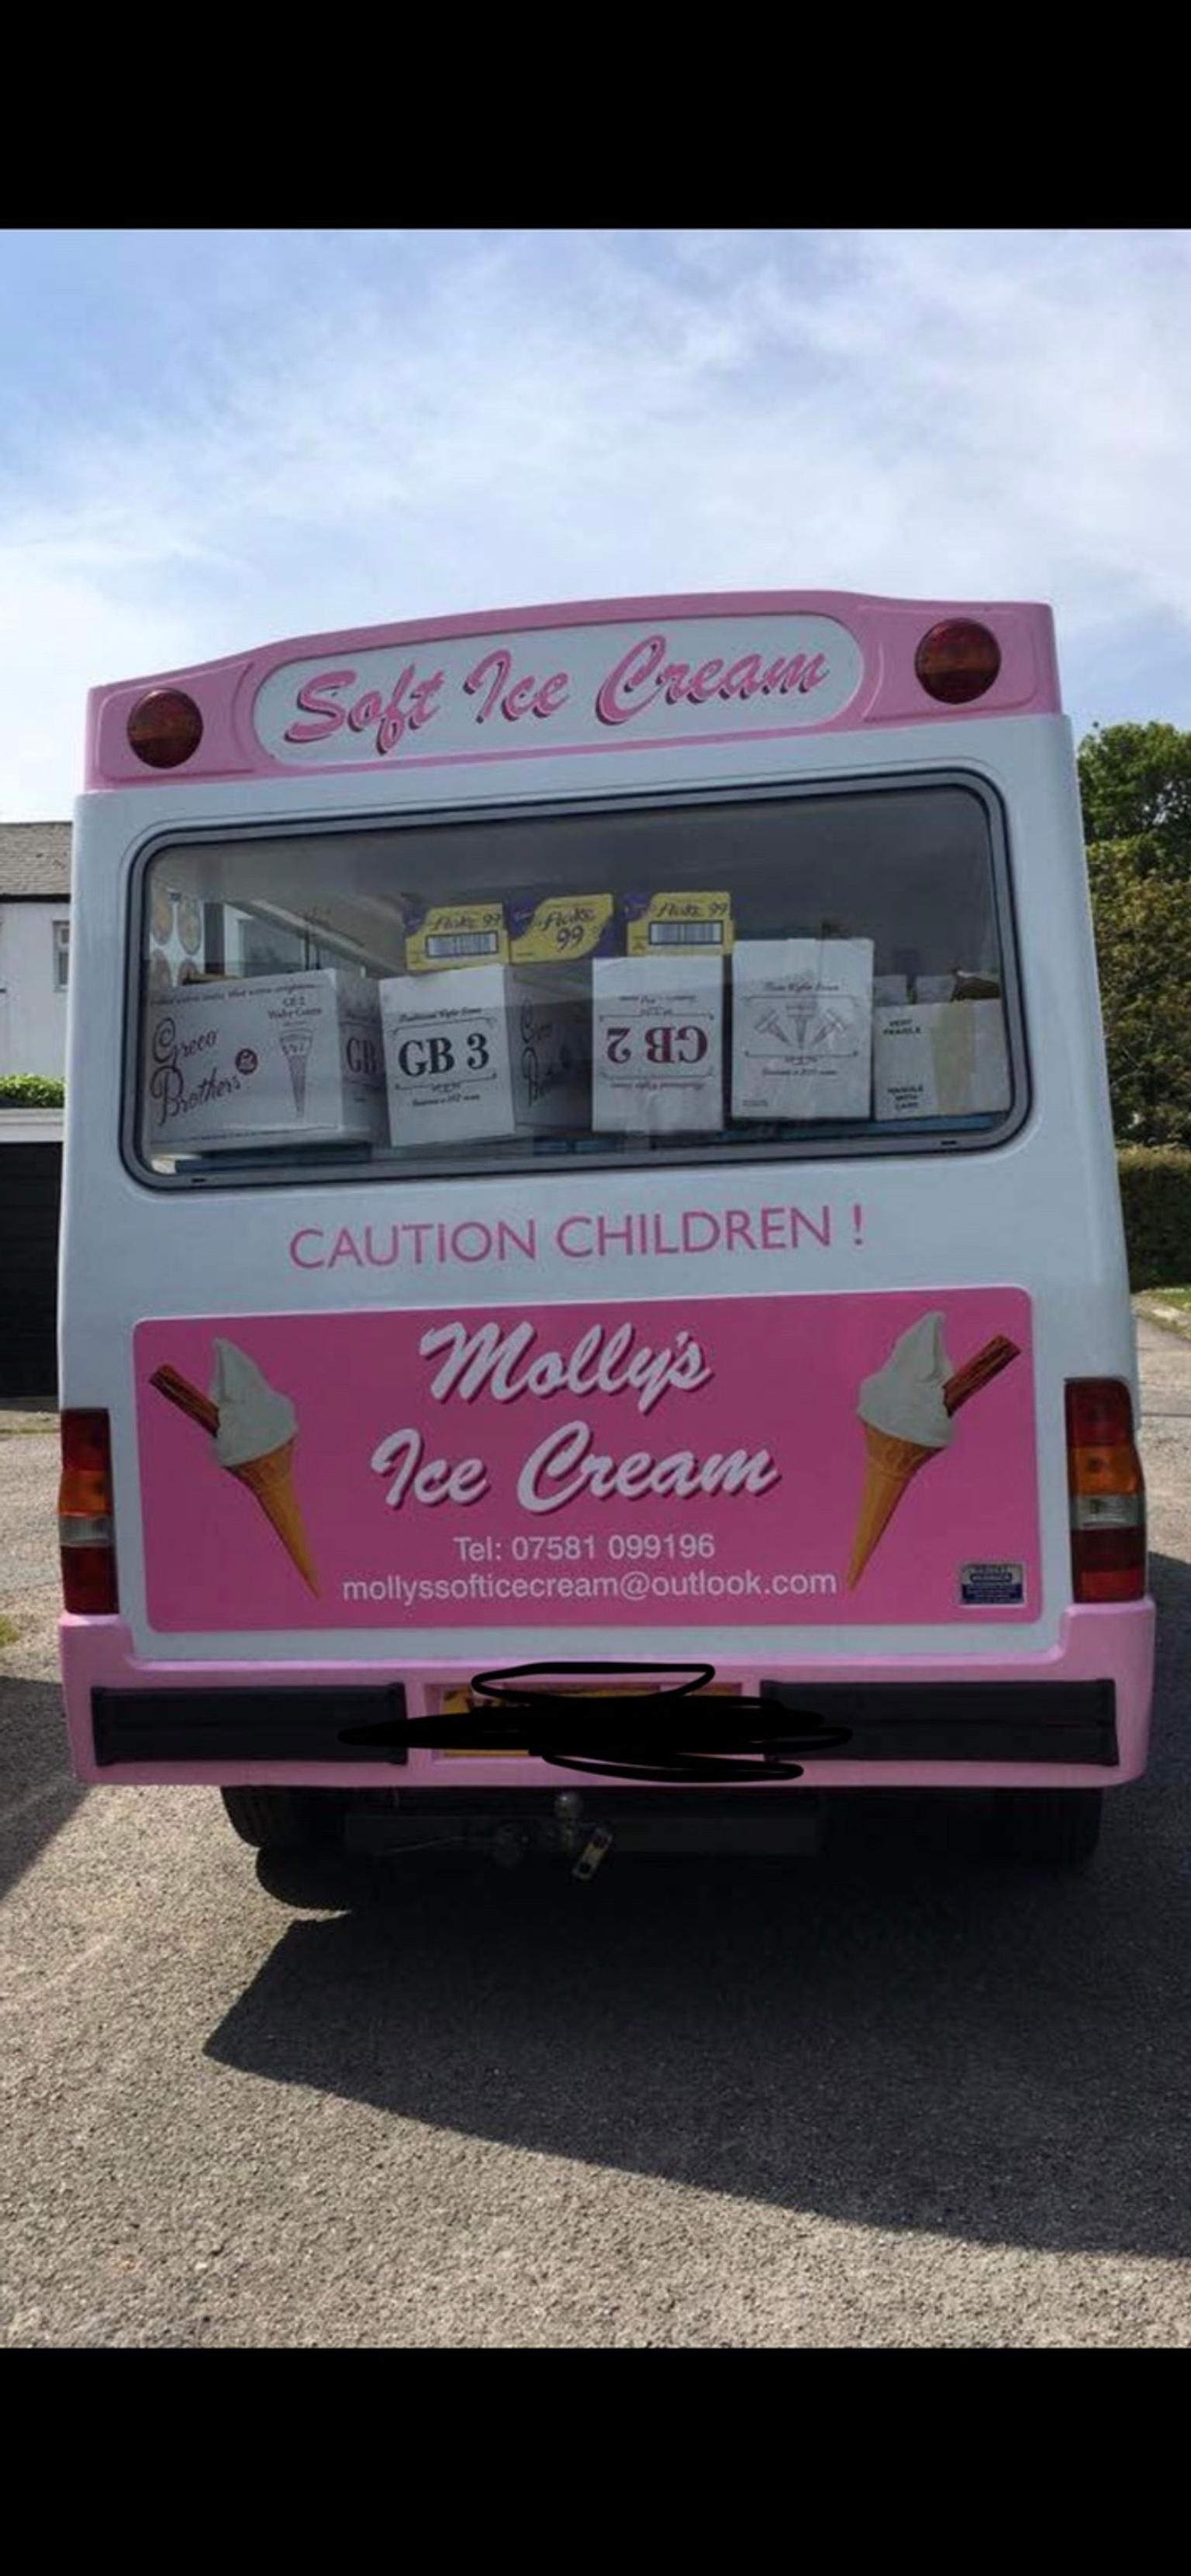 Ice Cream Van Whitby Morrison 2006 Ford Tran In St Helens For